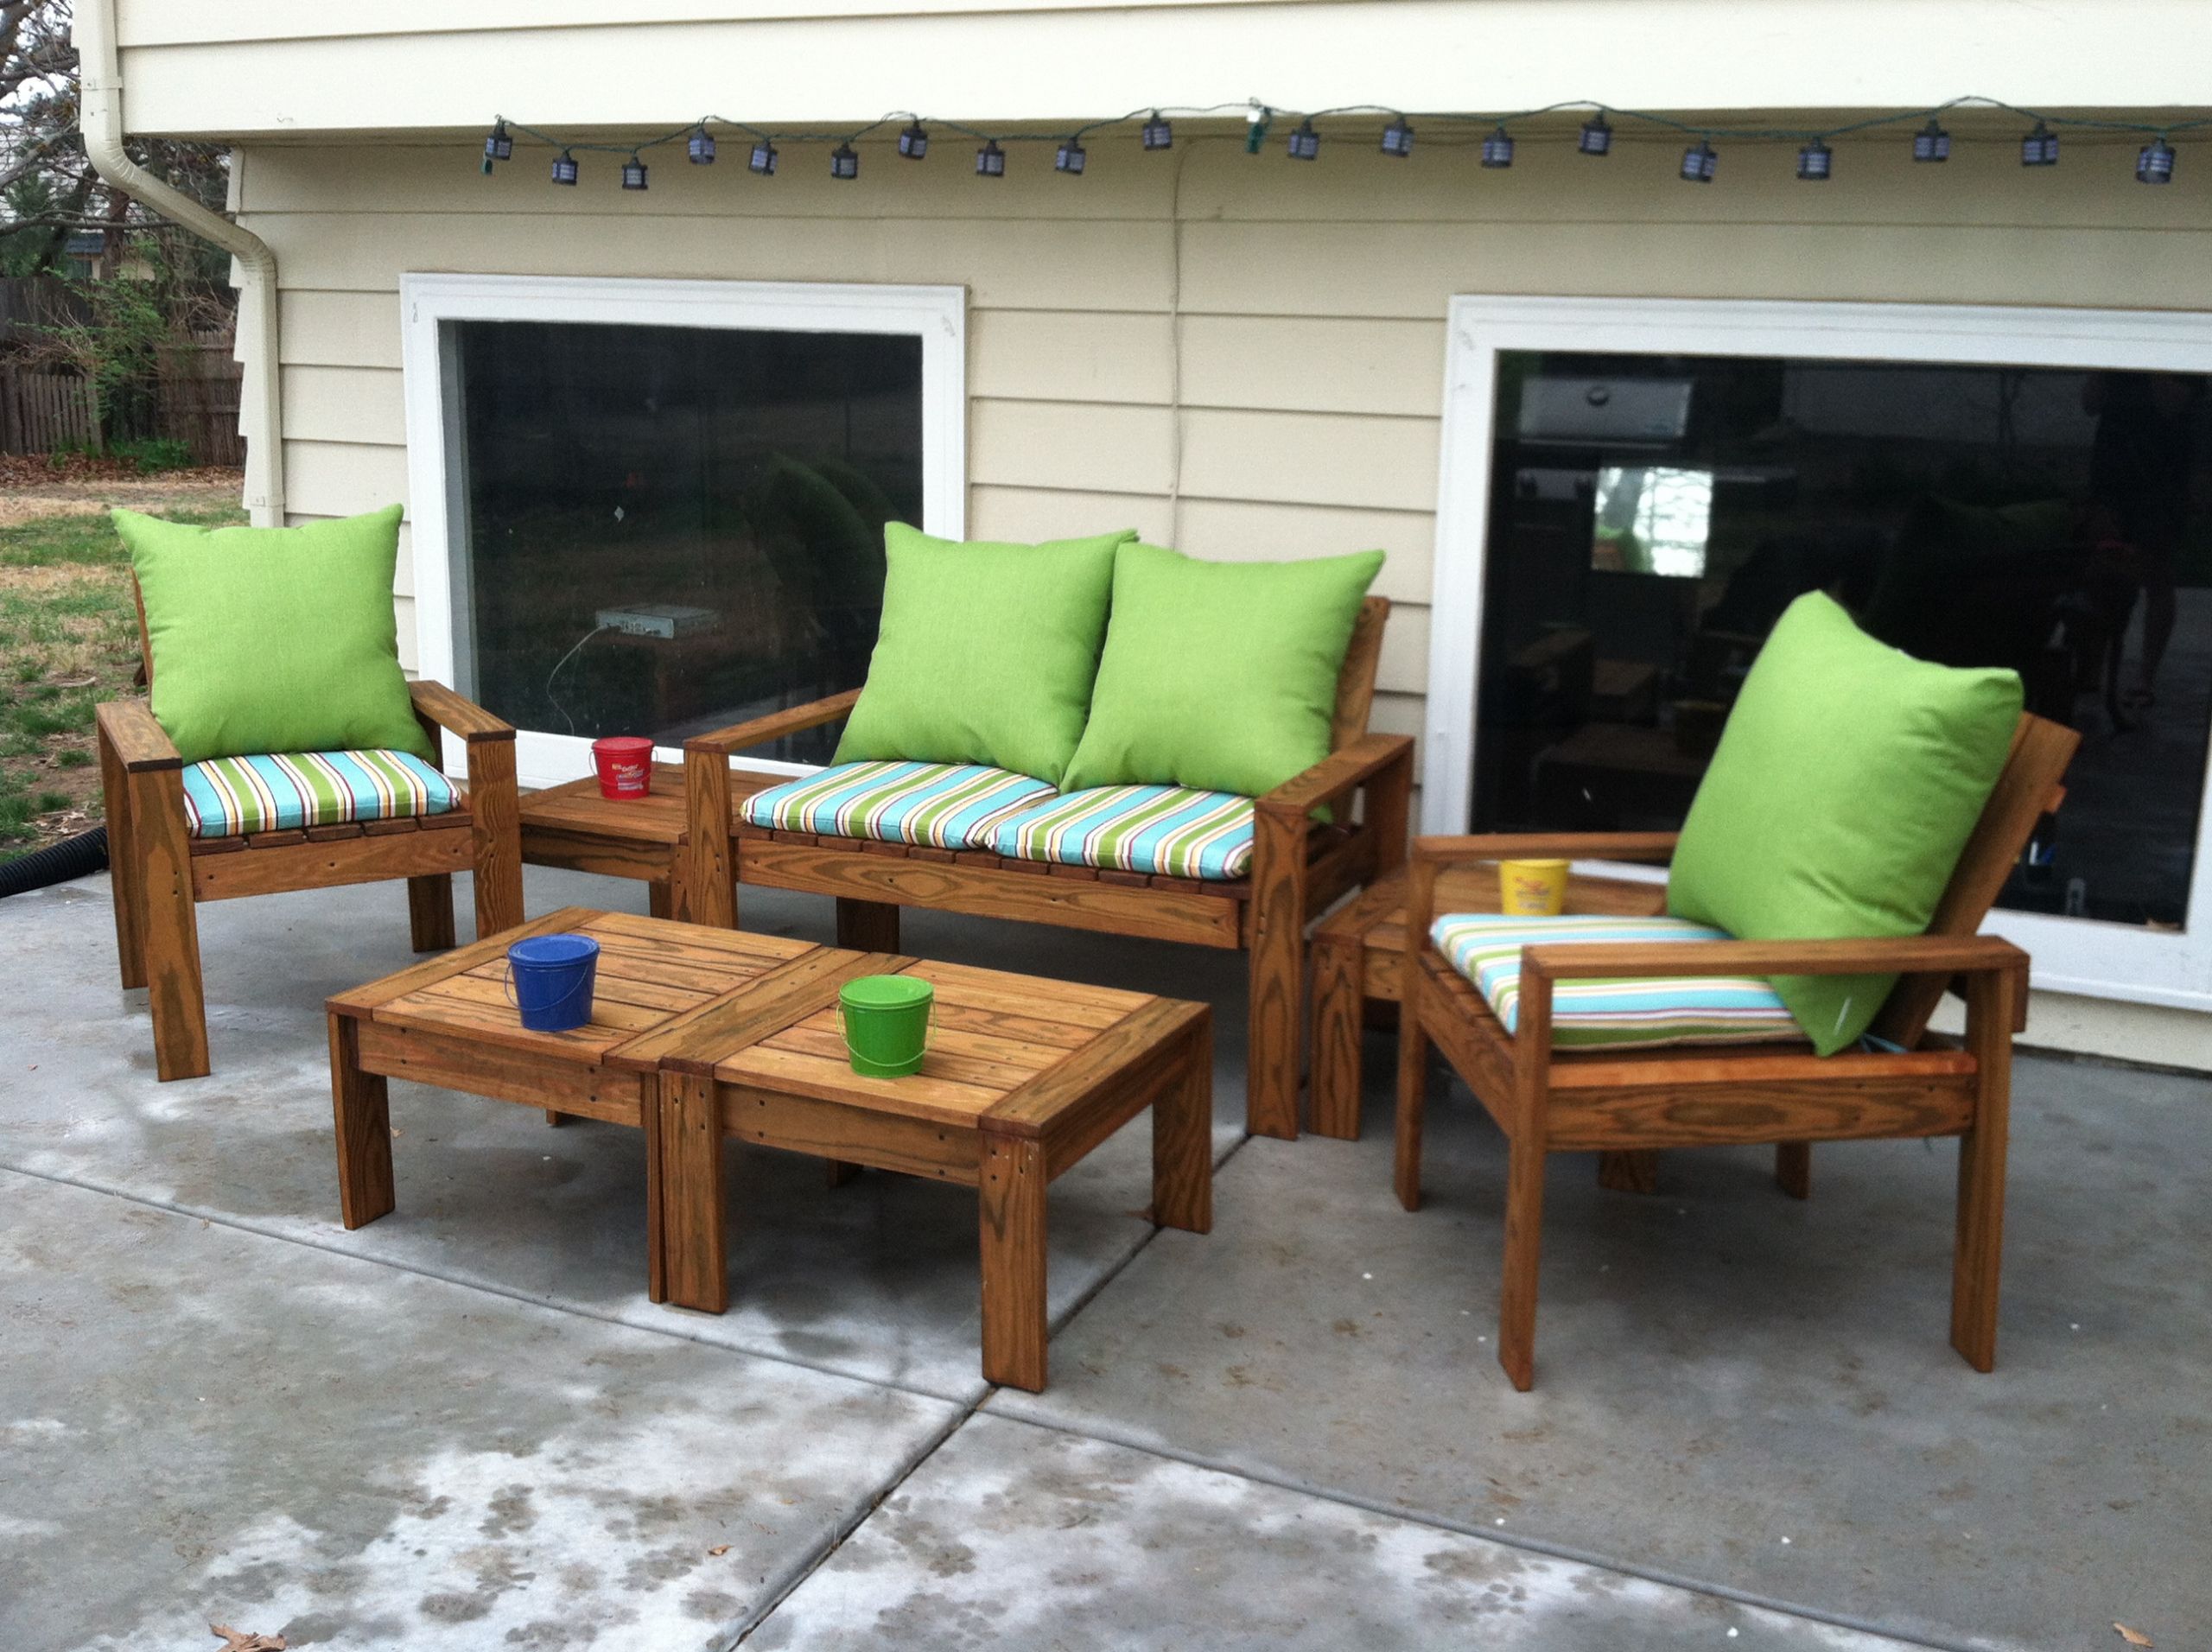 DIY Wooden Outdoor Furniture
 Ana White